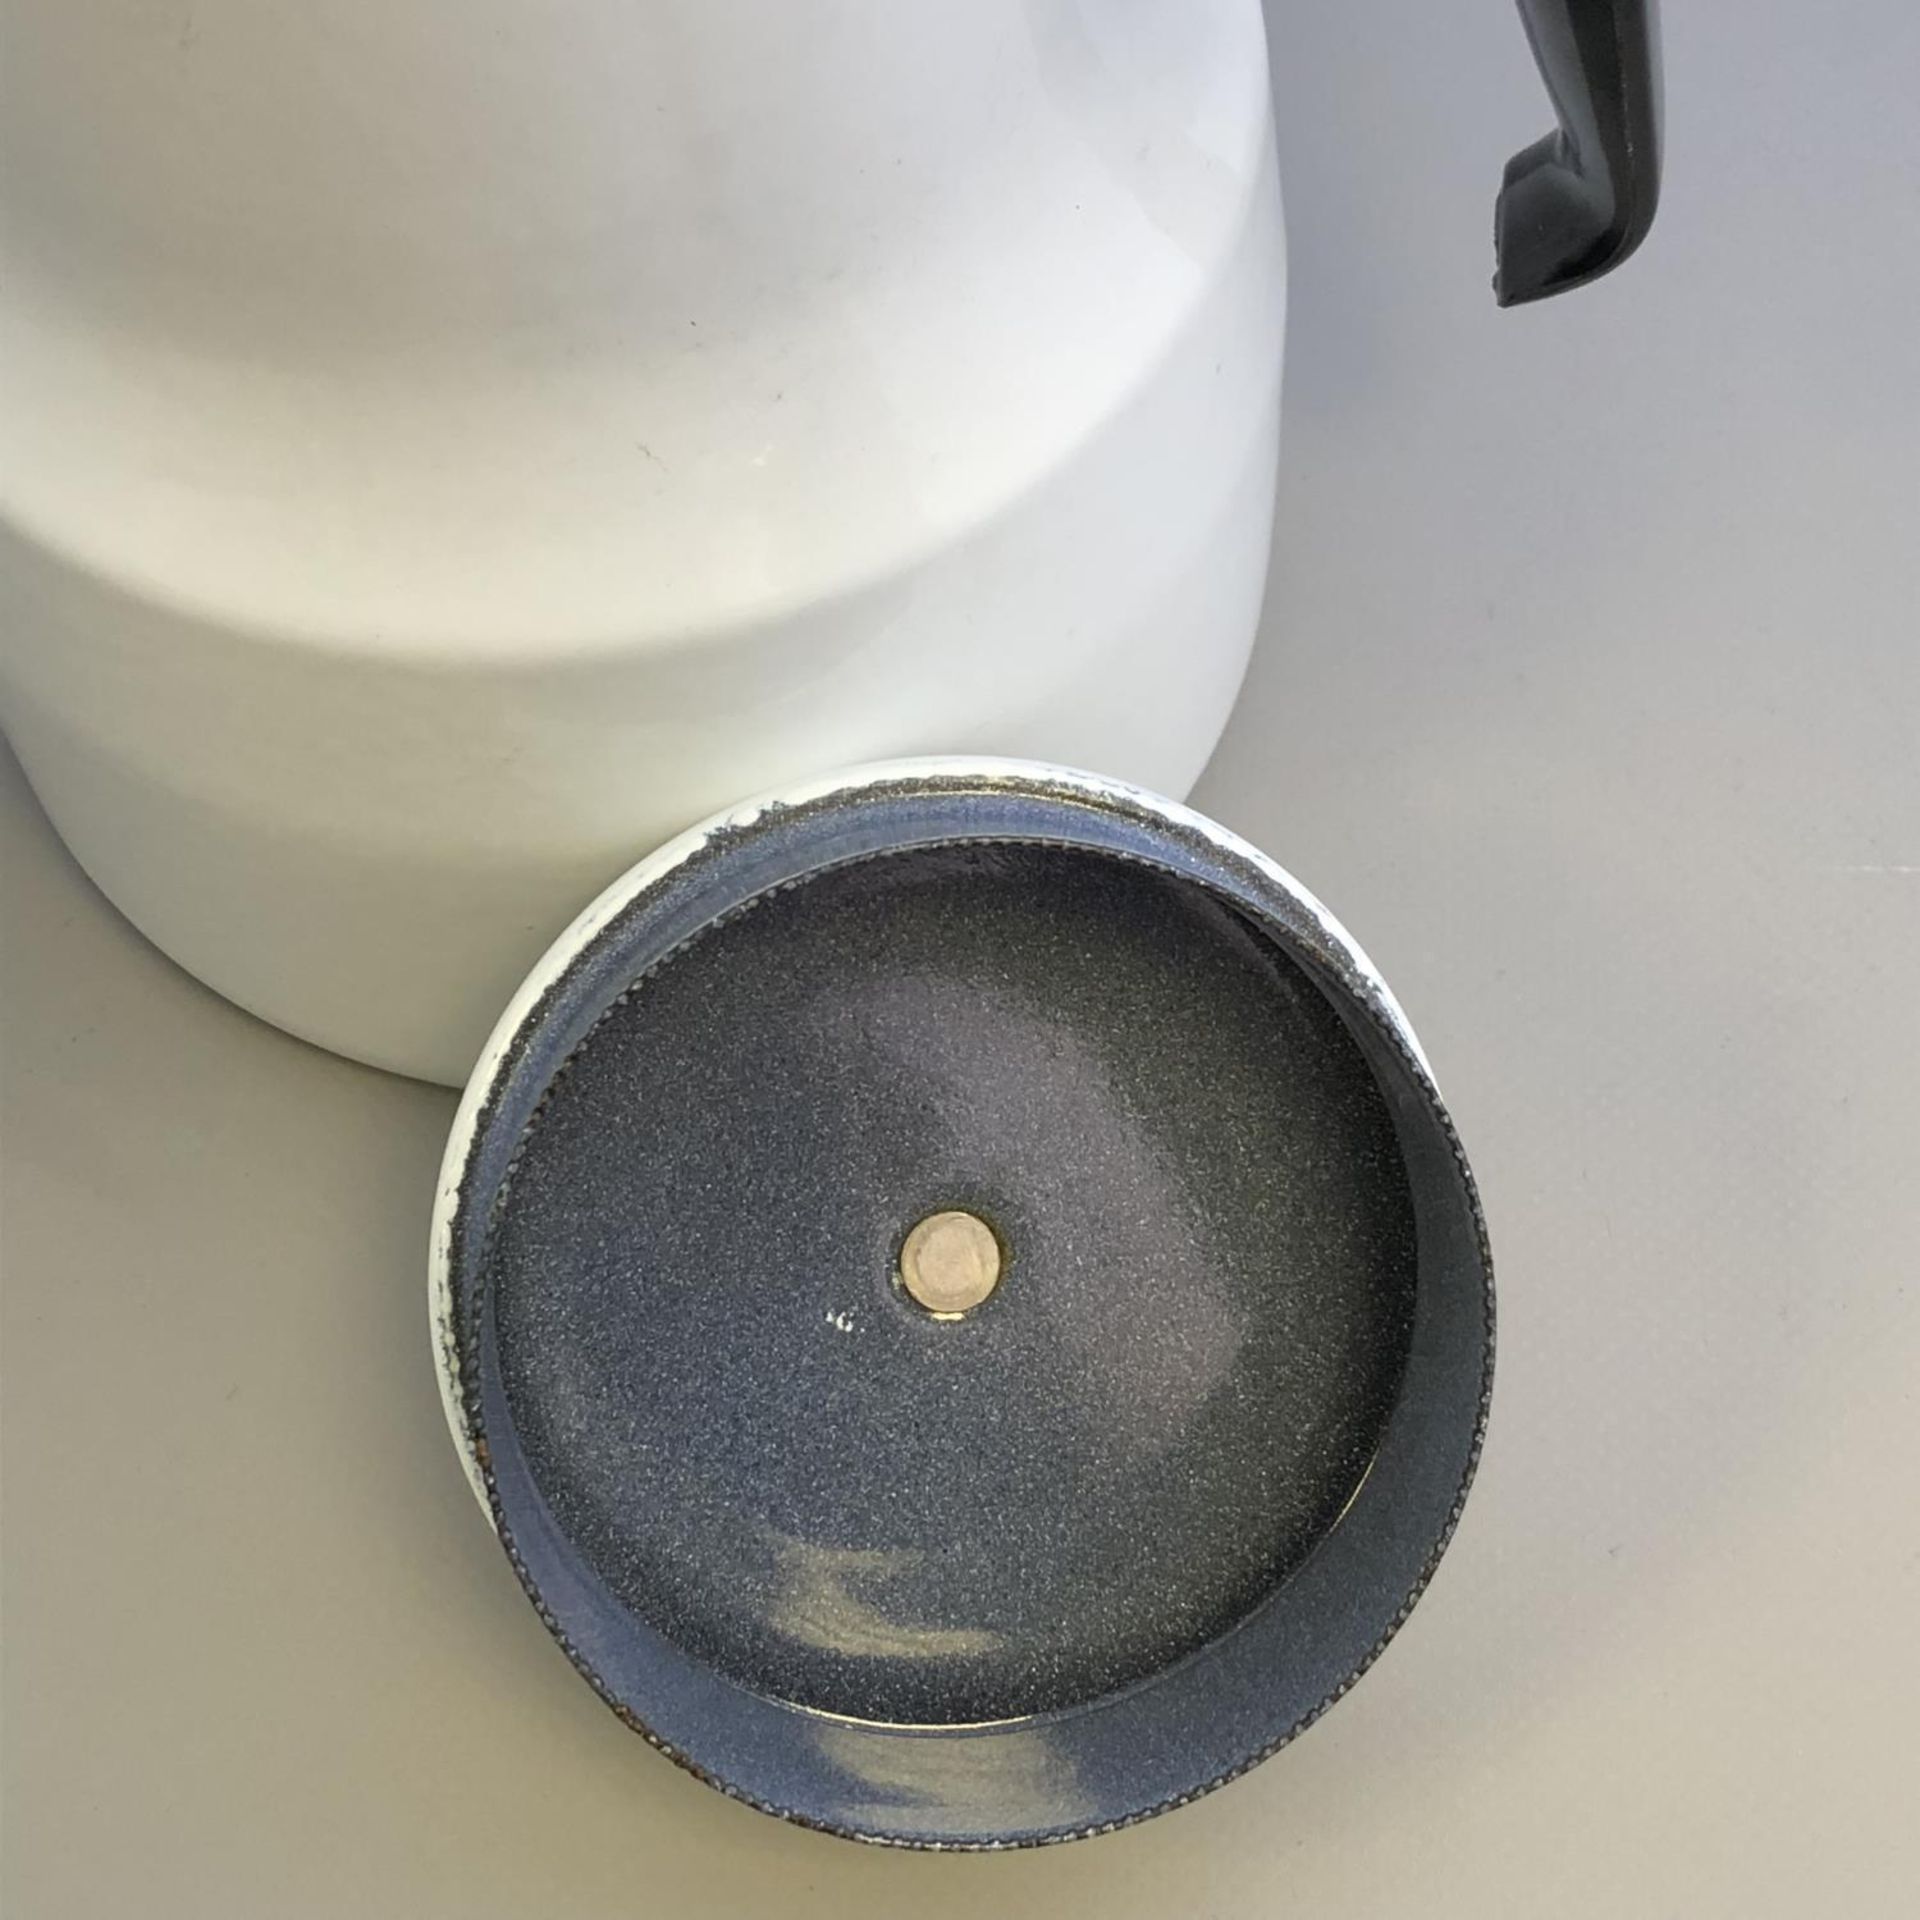 Scandinavian Design Enamel Coffee Pot - Unmarked - Black & White Retro Kitchen - Image 2 of 5